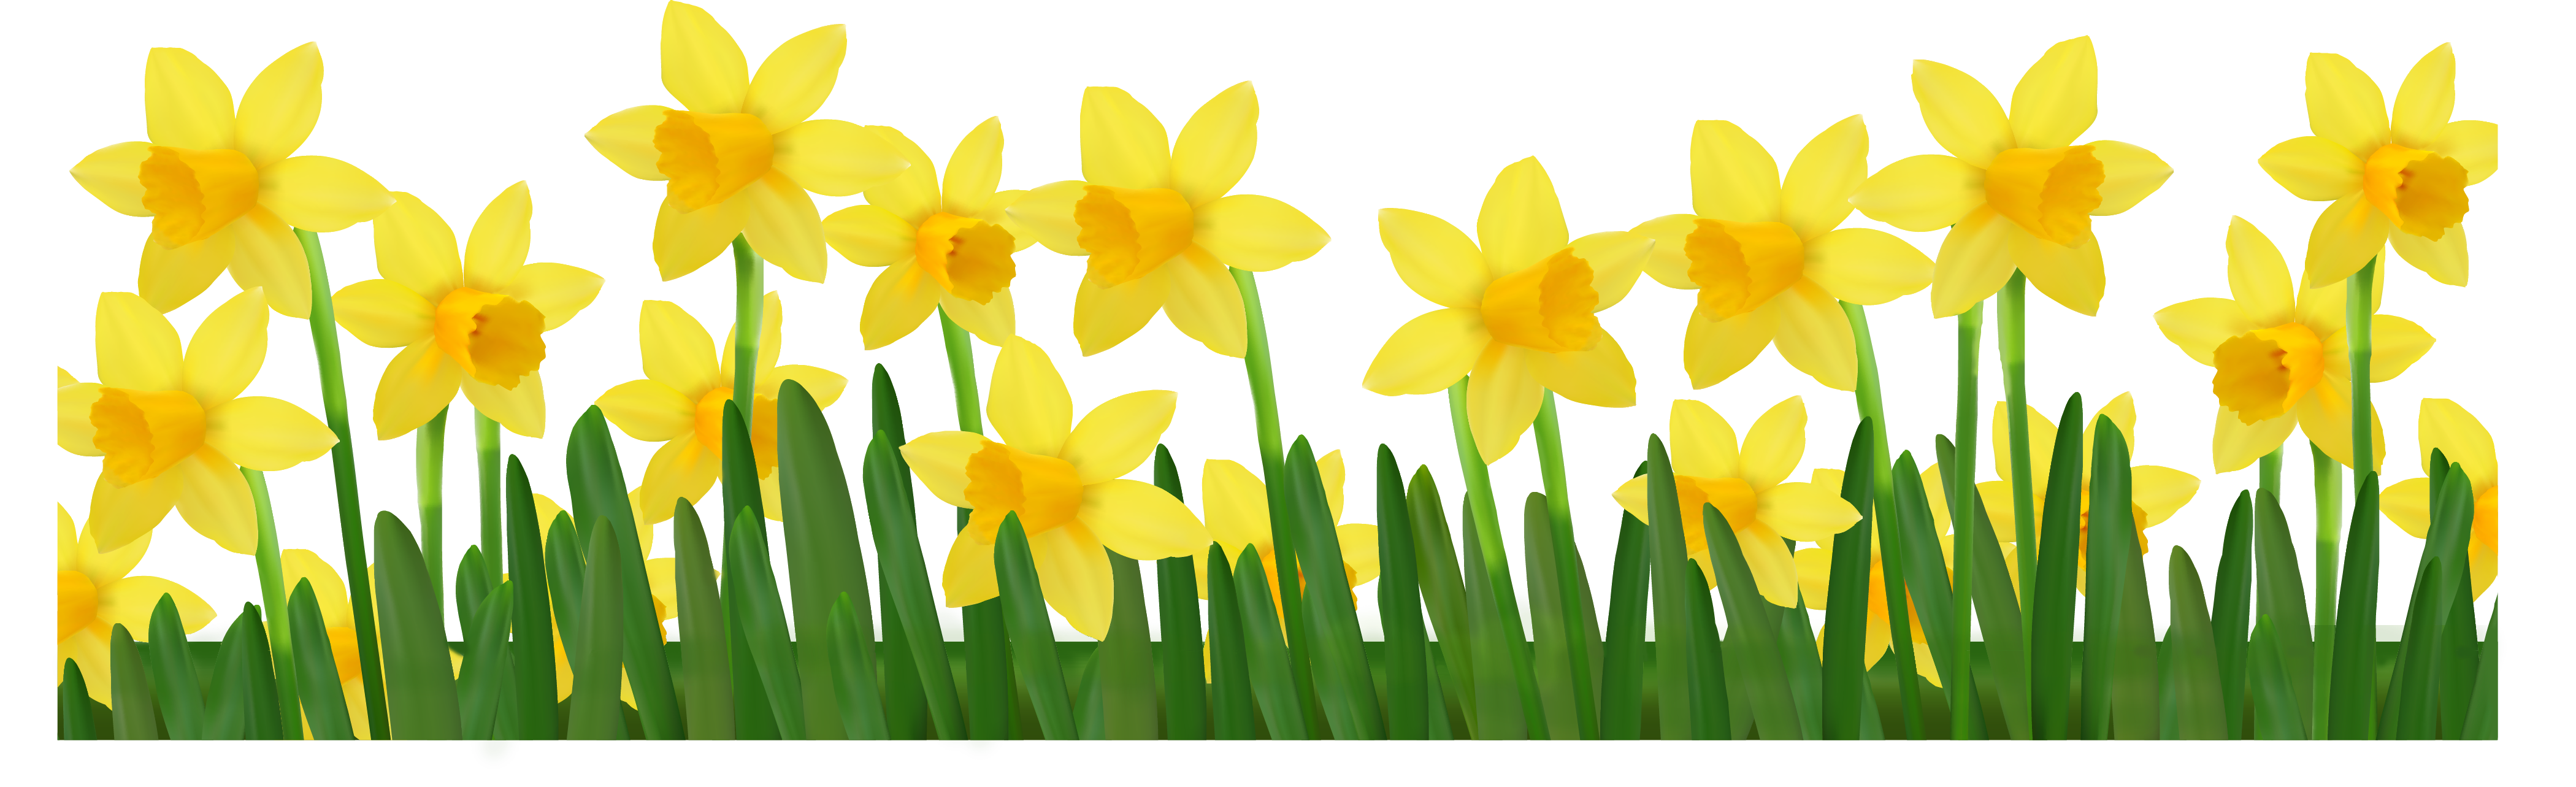 Daffodils Images